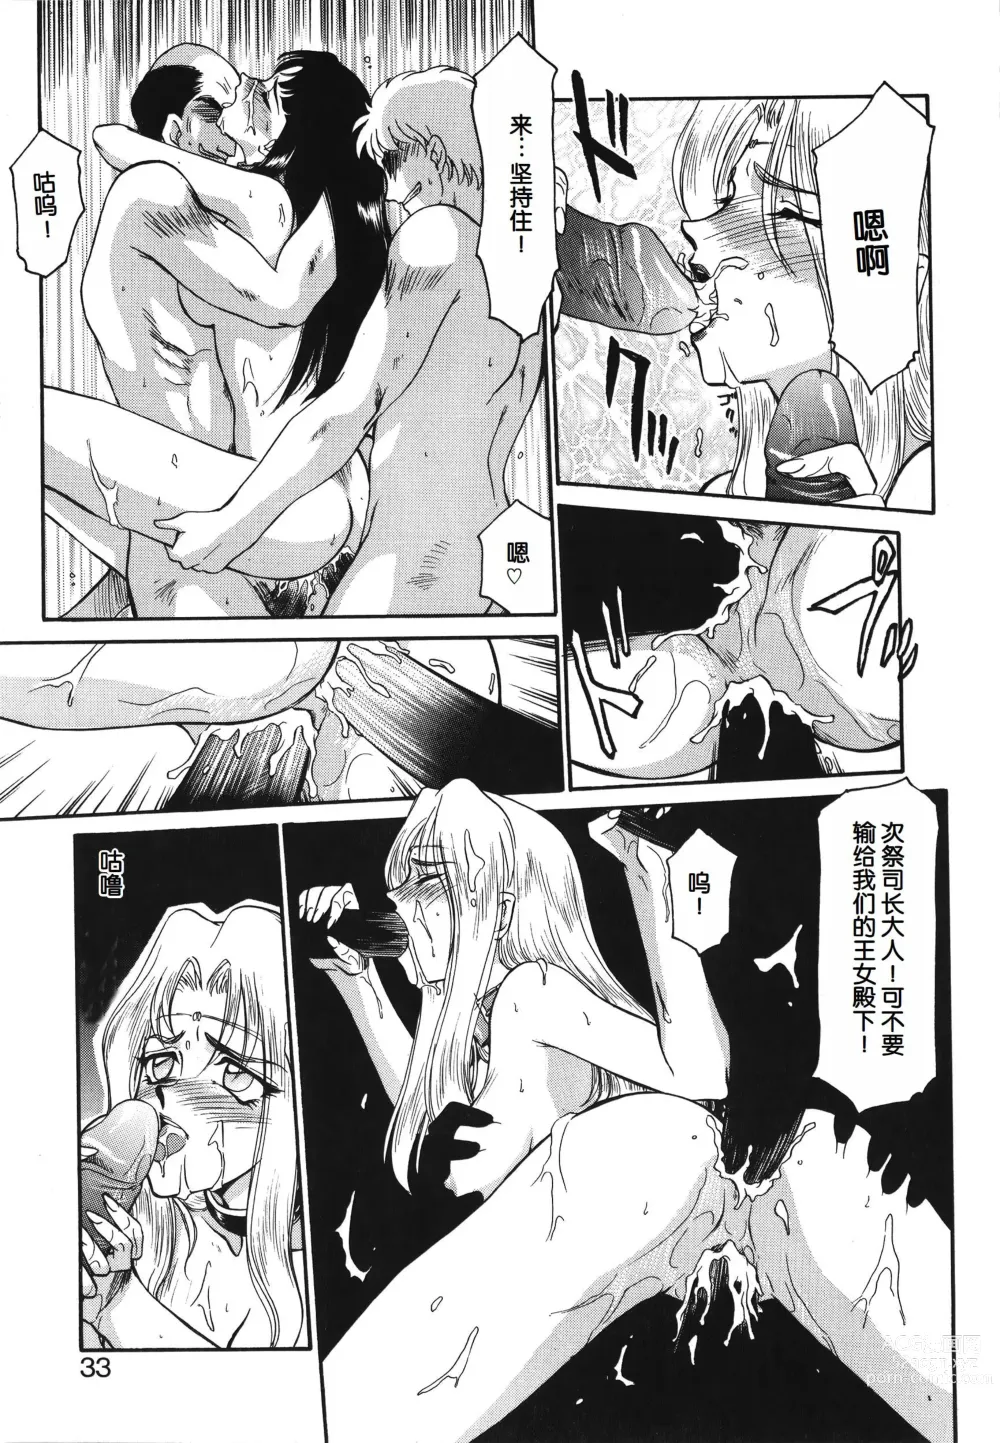 Page 33 of manga Bad Moon...